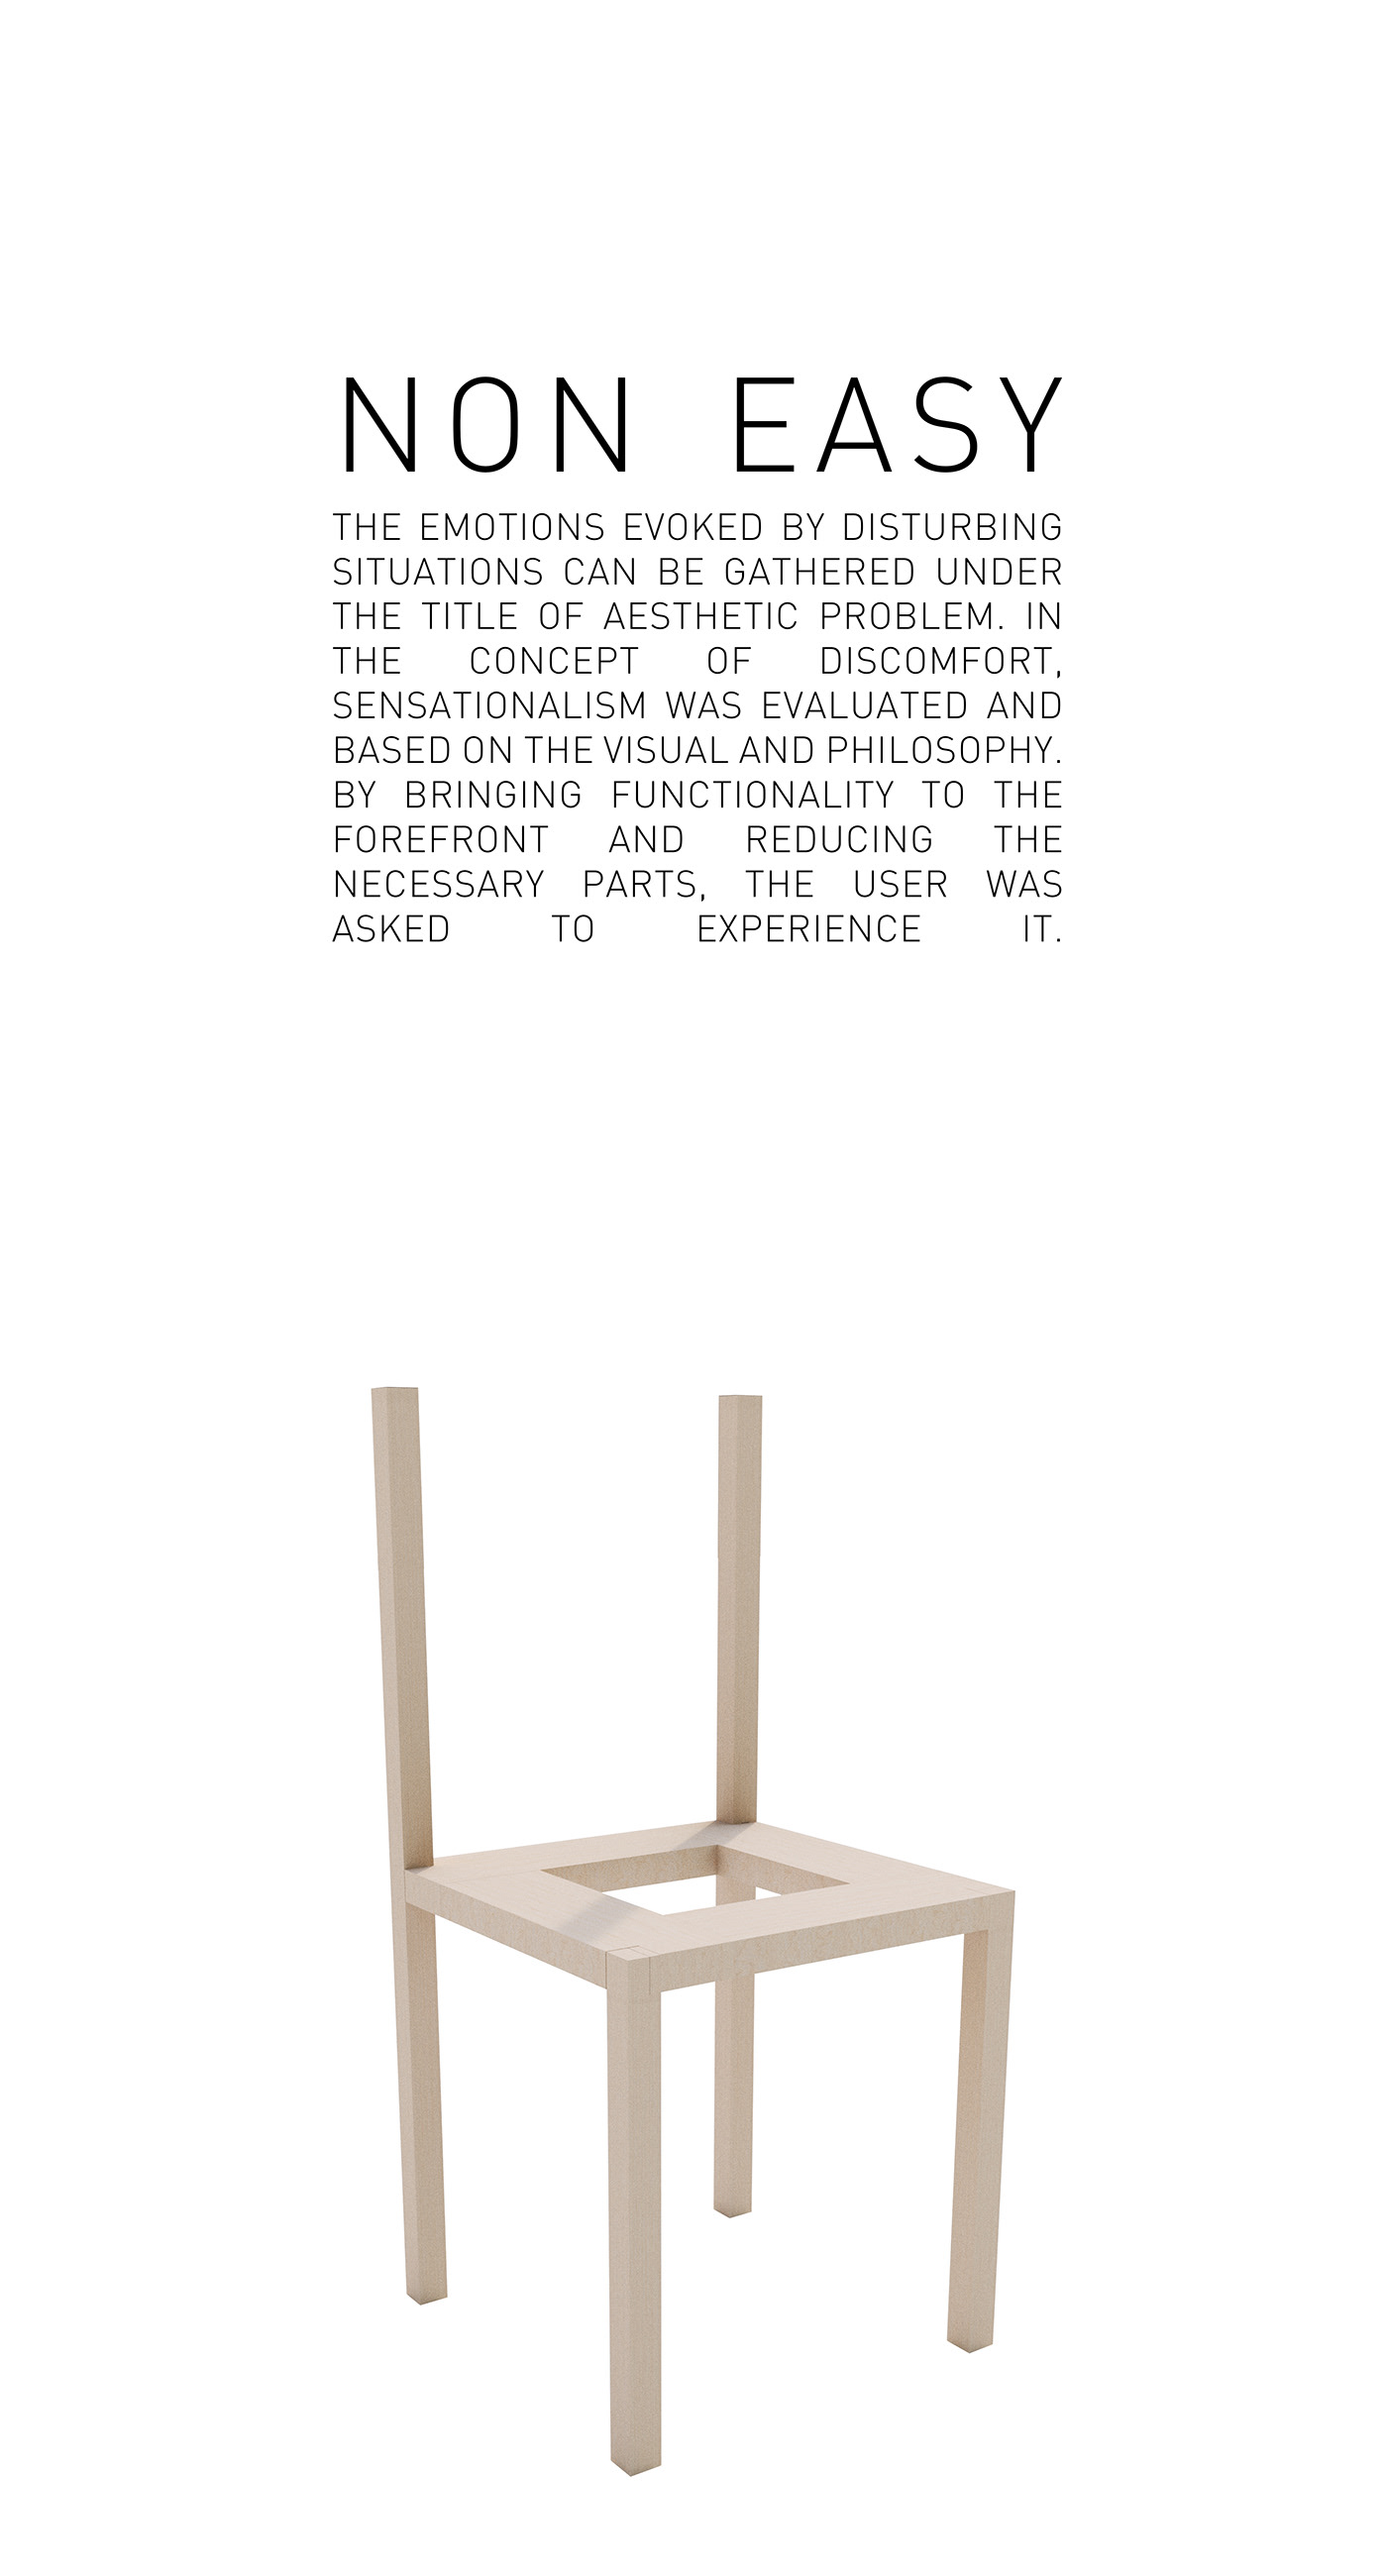 Manifest noneasy furniture design ILLUSTRATION  cinema4d wood CGI 3dmodel chair